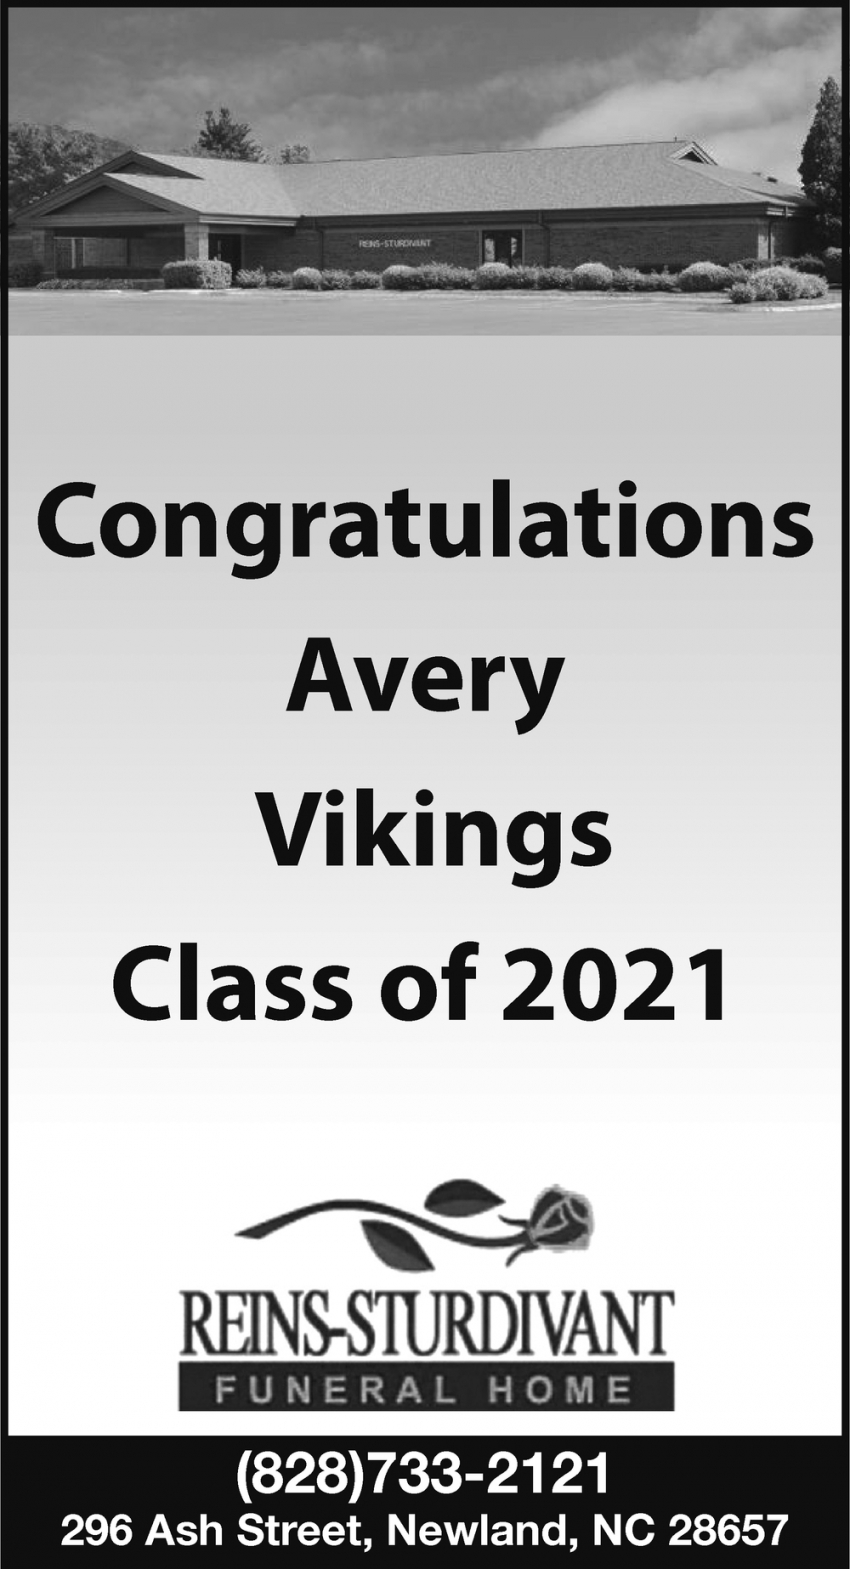 Congratulations Avery Vikings Class of 2021